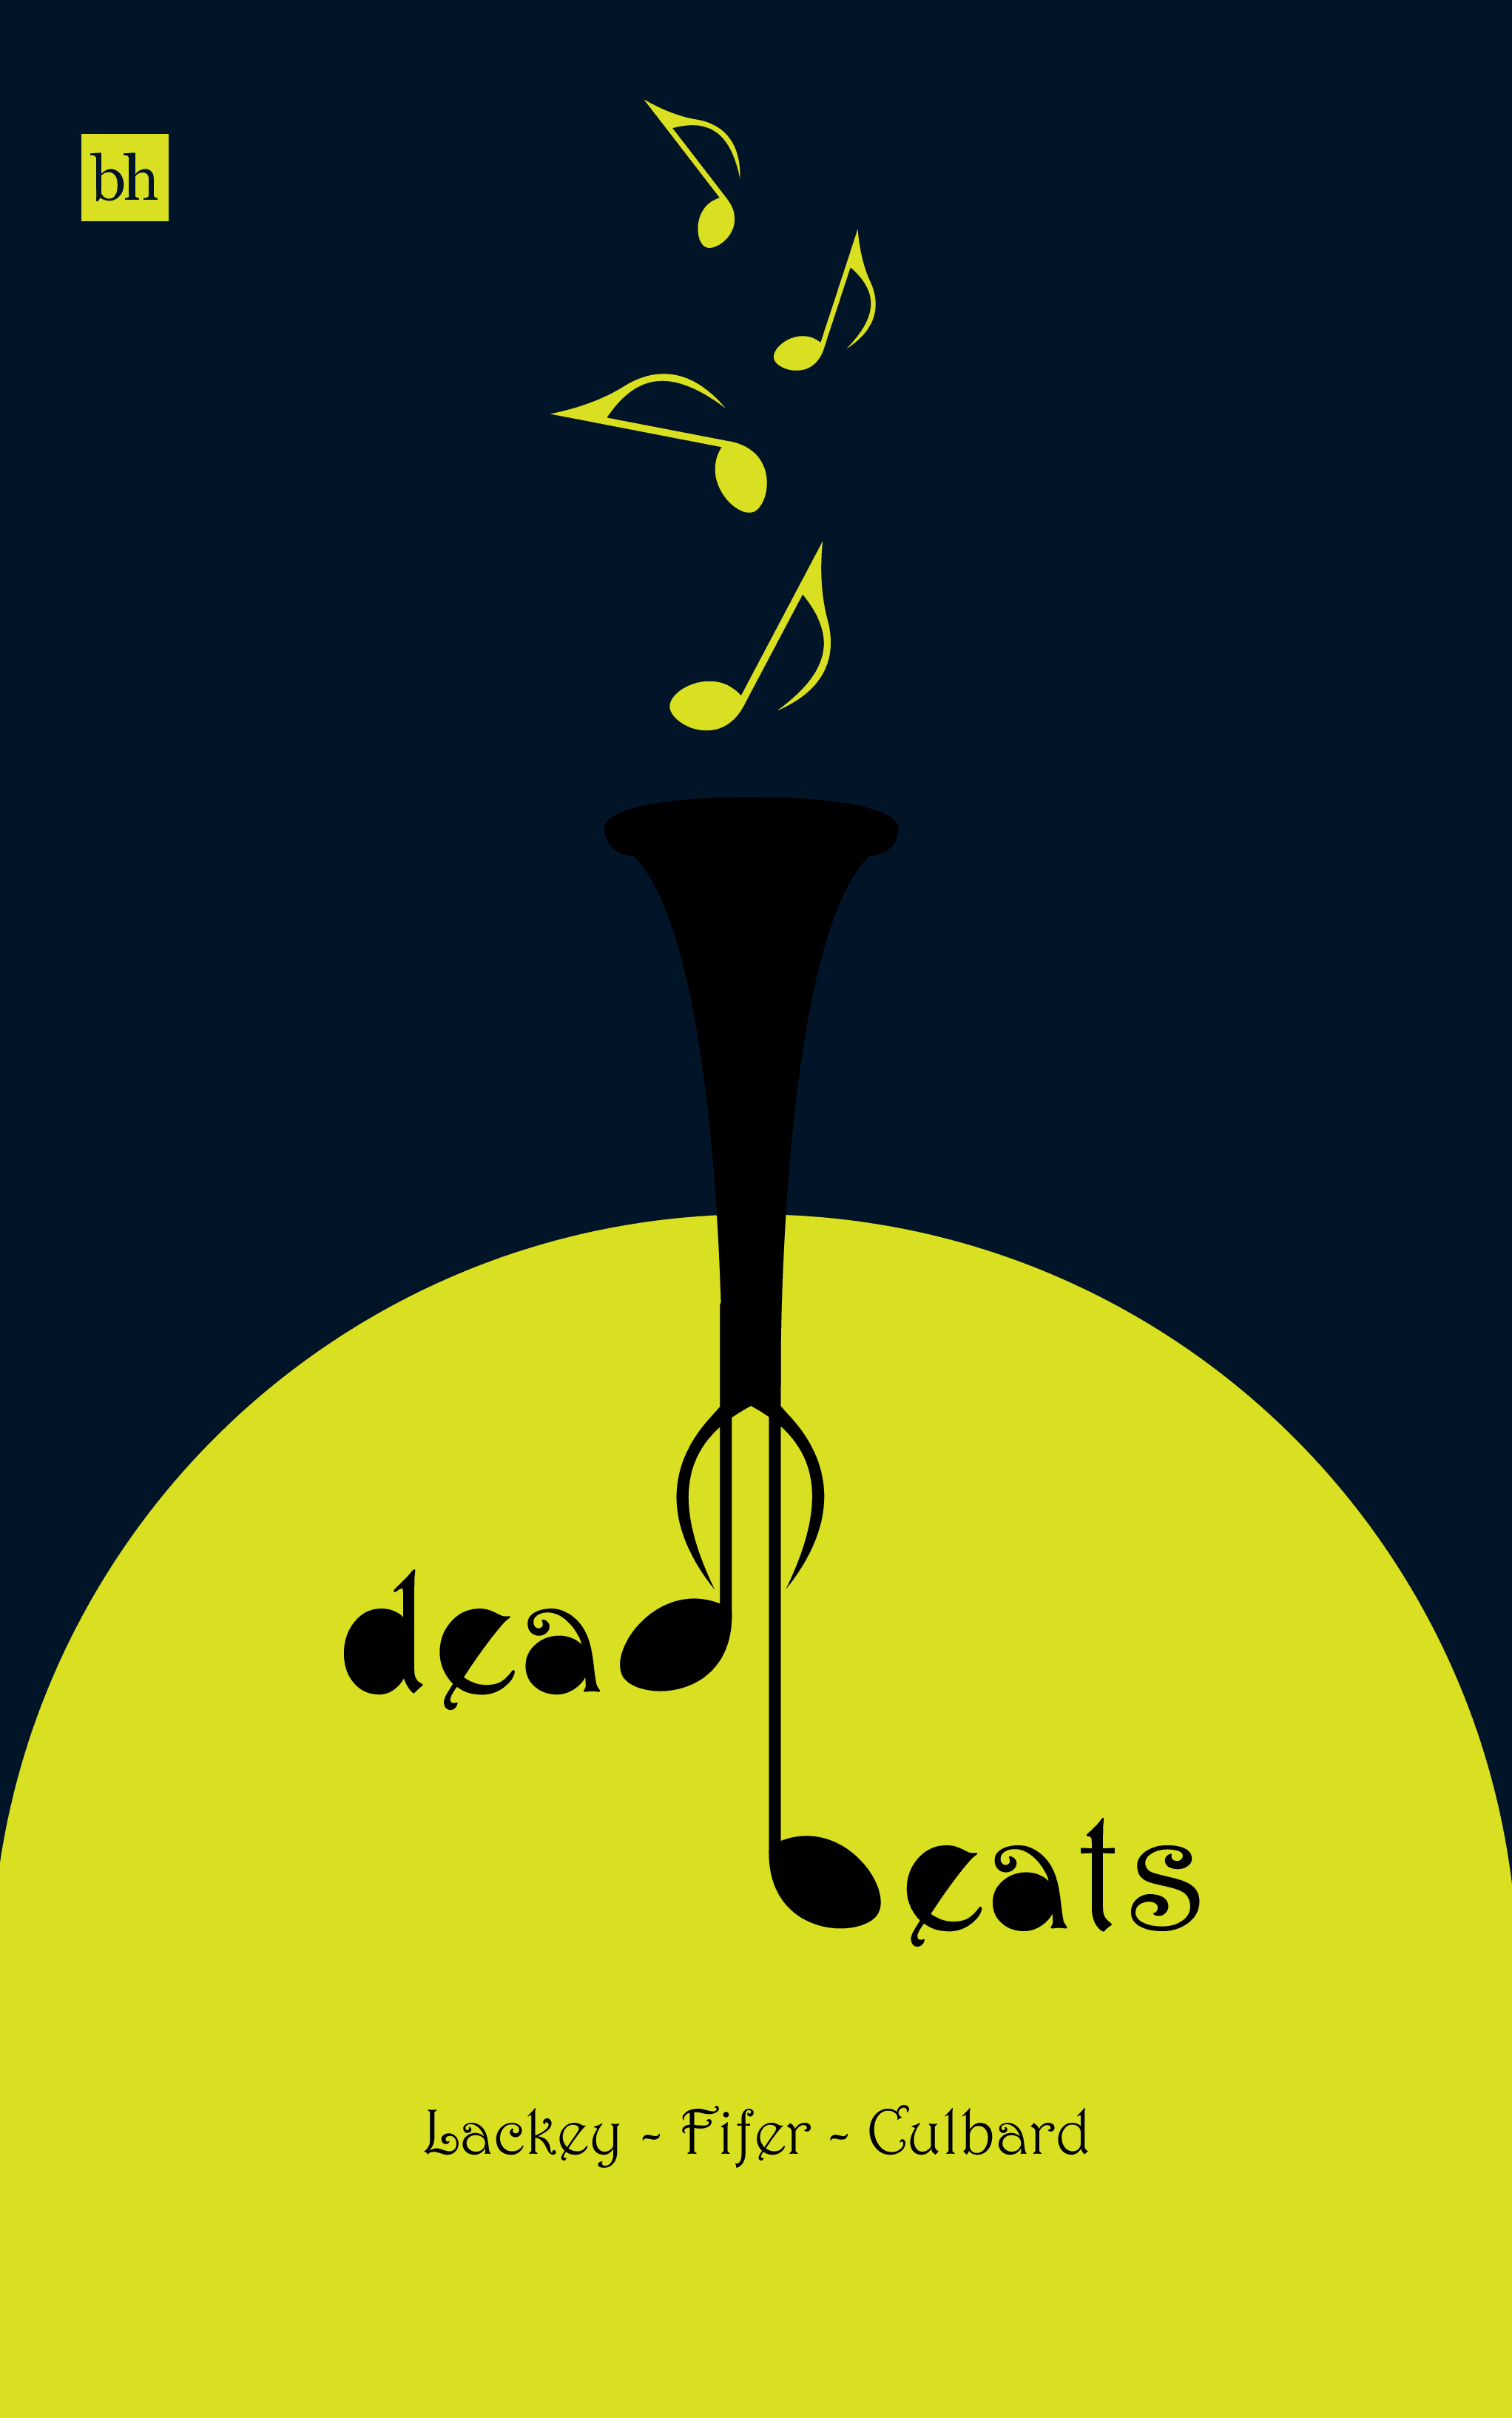 Book cover mock thumbnail for Deadbeats